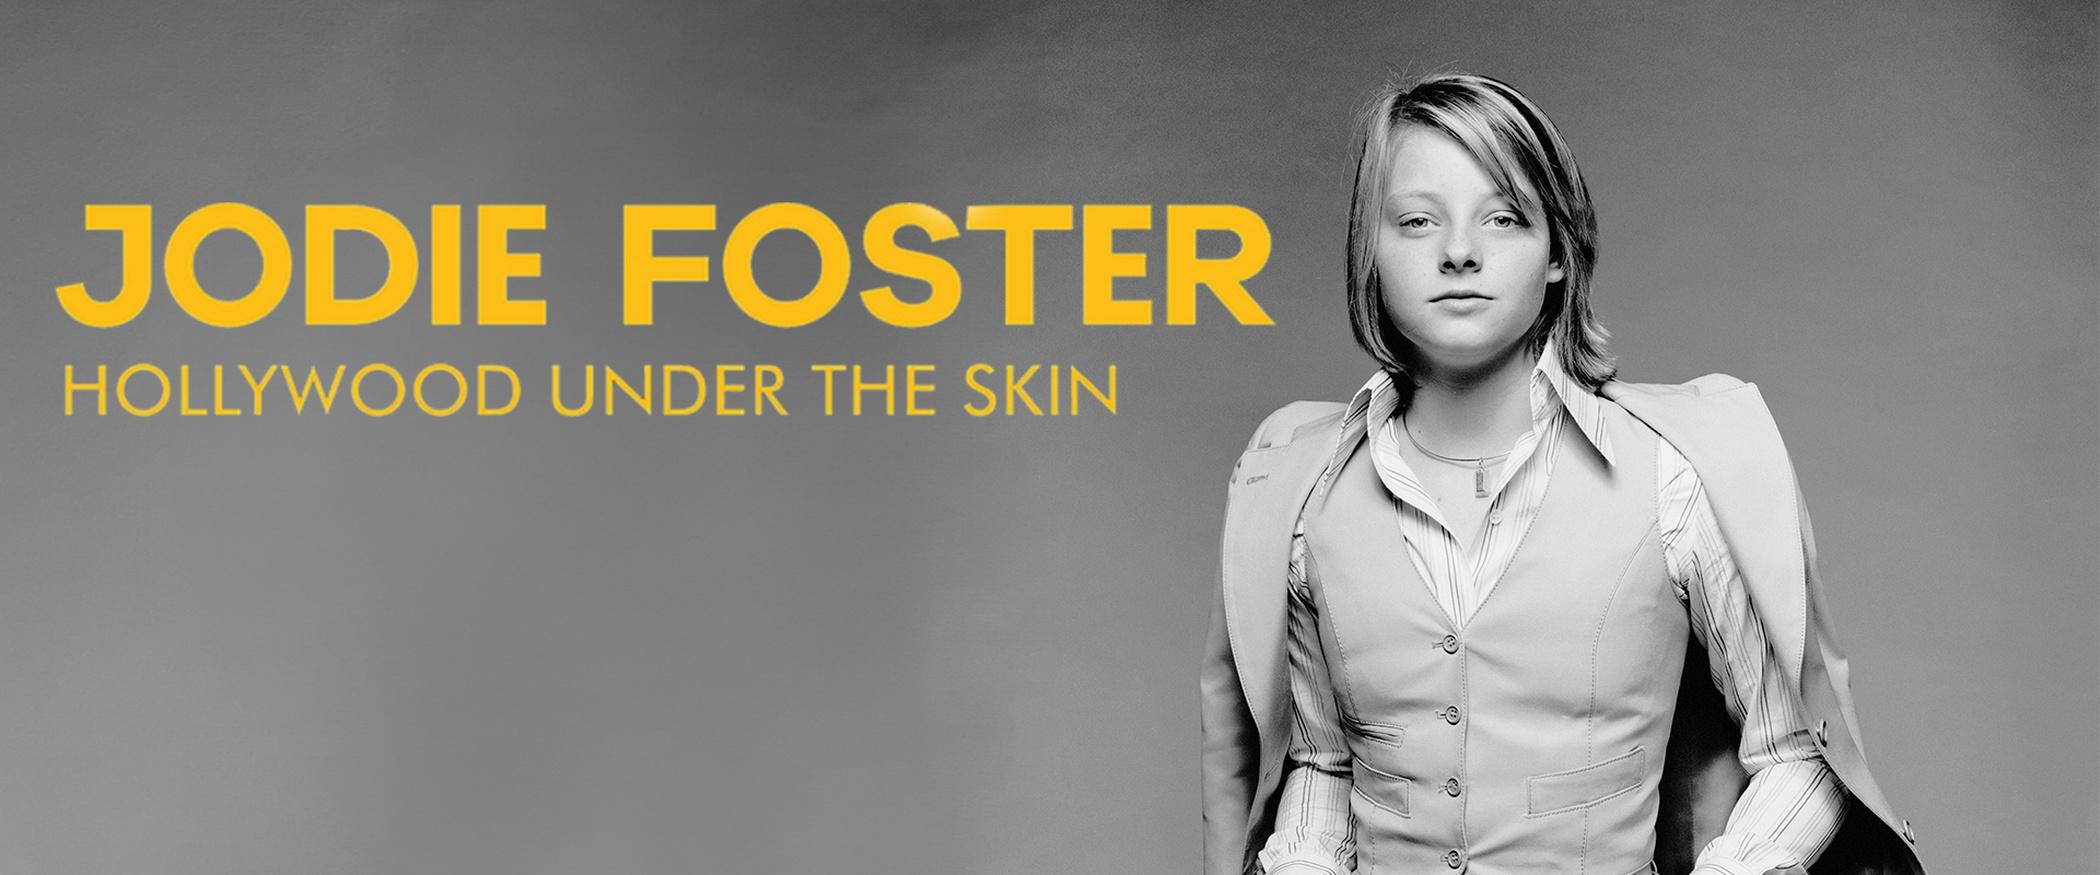 Jodie Foster, Hollywood Under the Skin, Video